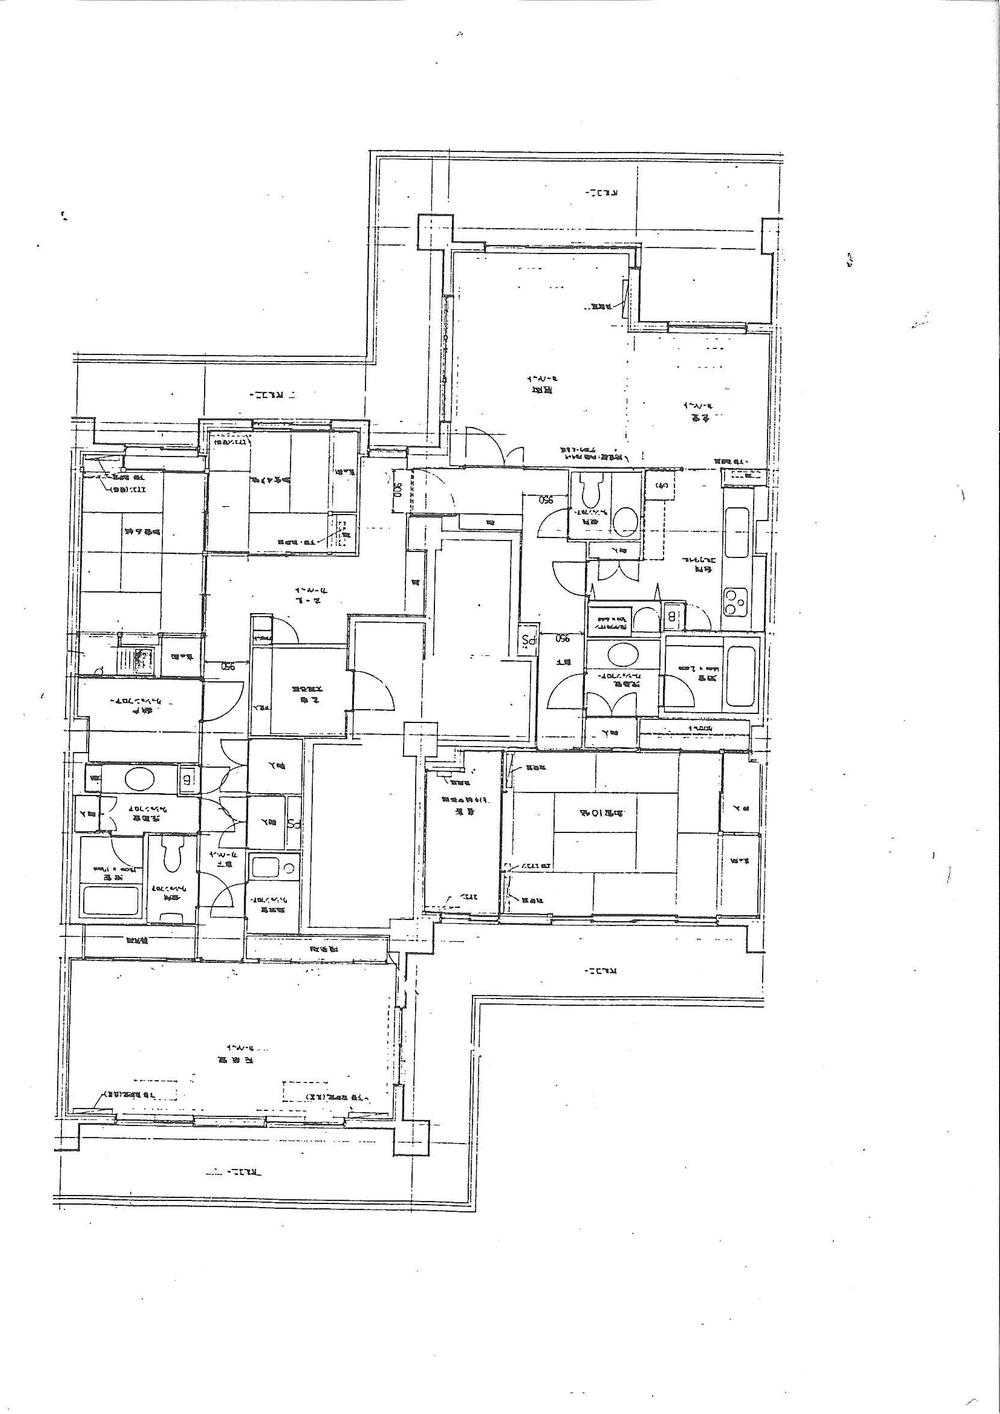 Floor plan. 4LDK + S (storeroom), Price 29 million yen, Footprint 178.92 sq m , Balcony area 64.73 sq m